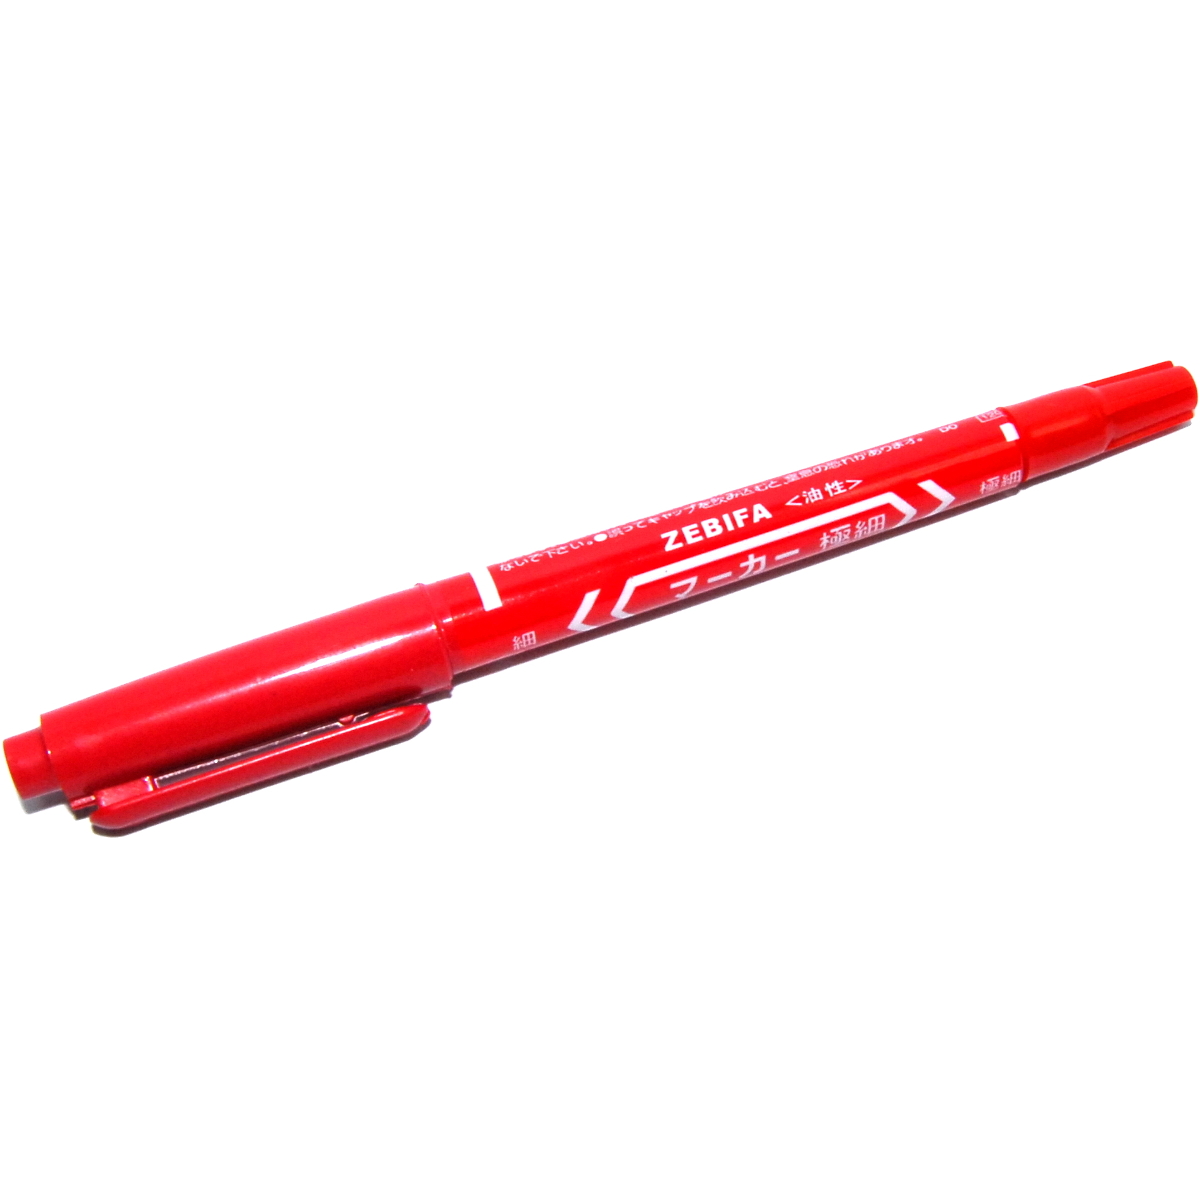 Etch Resistant Pen Thick Thin Red Black Ferric Chloride Zebifa Pcb Flux Workshop Ebay